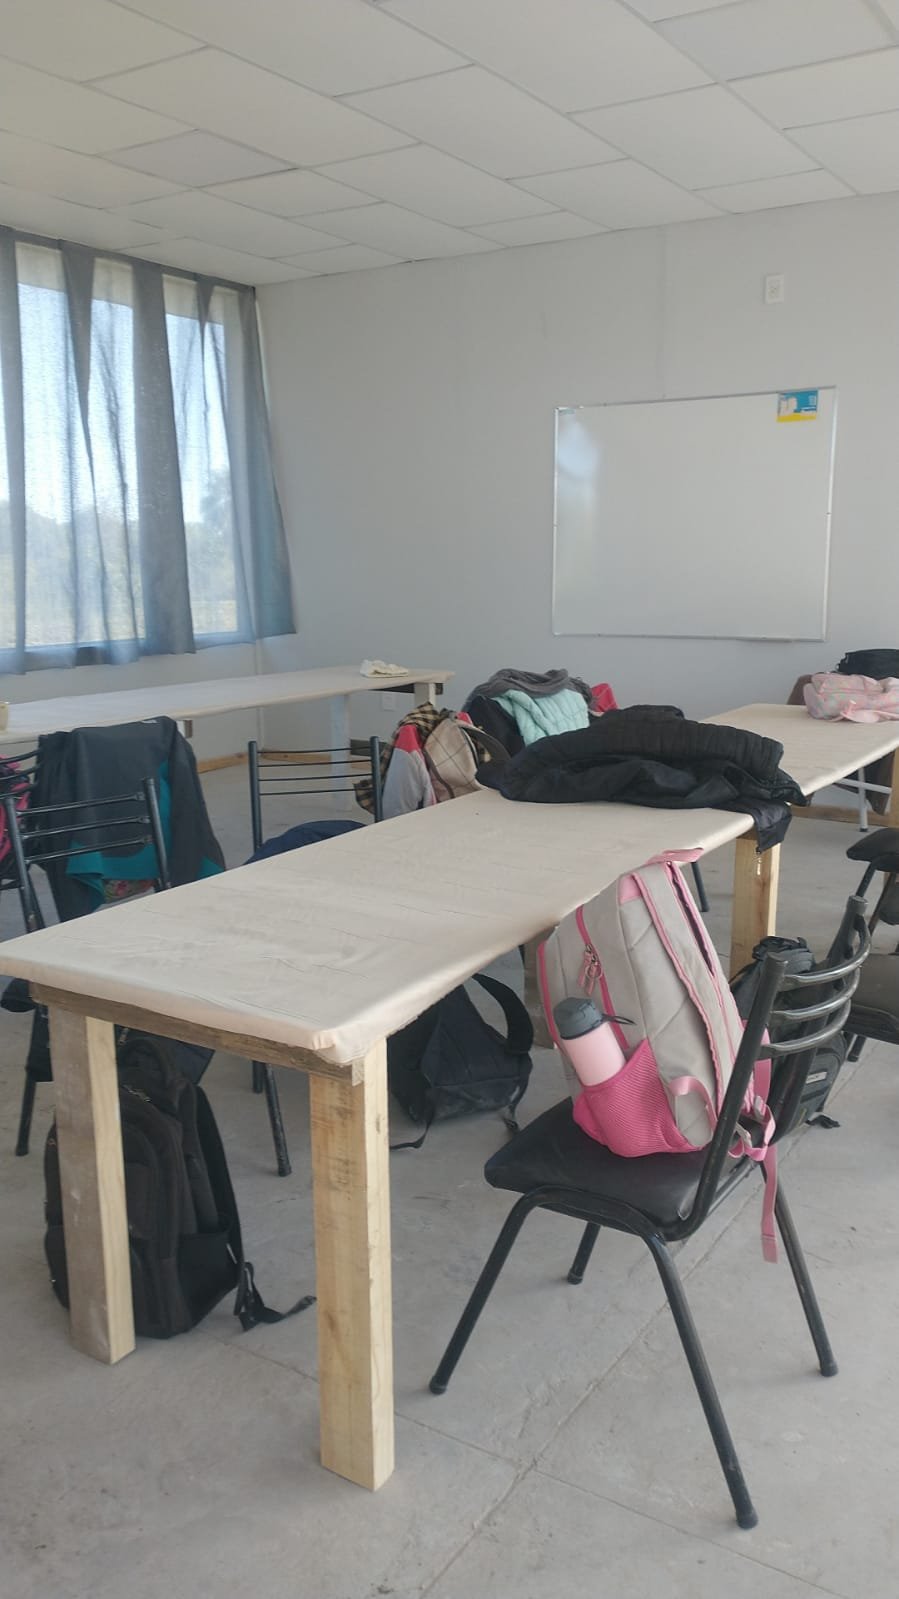  A finished classroom 